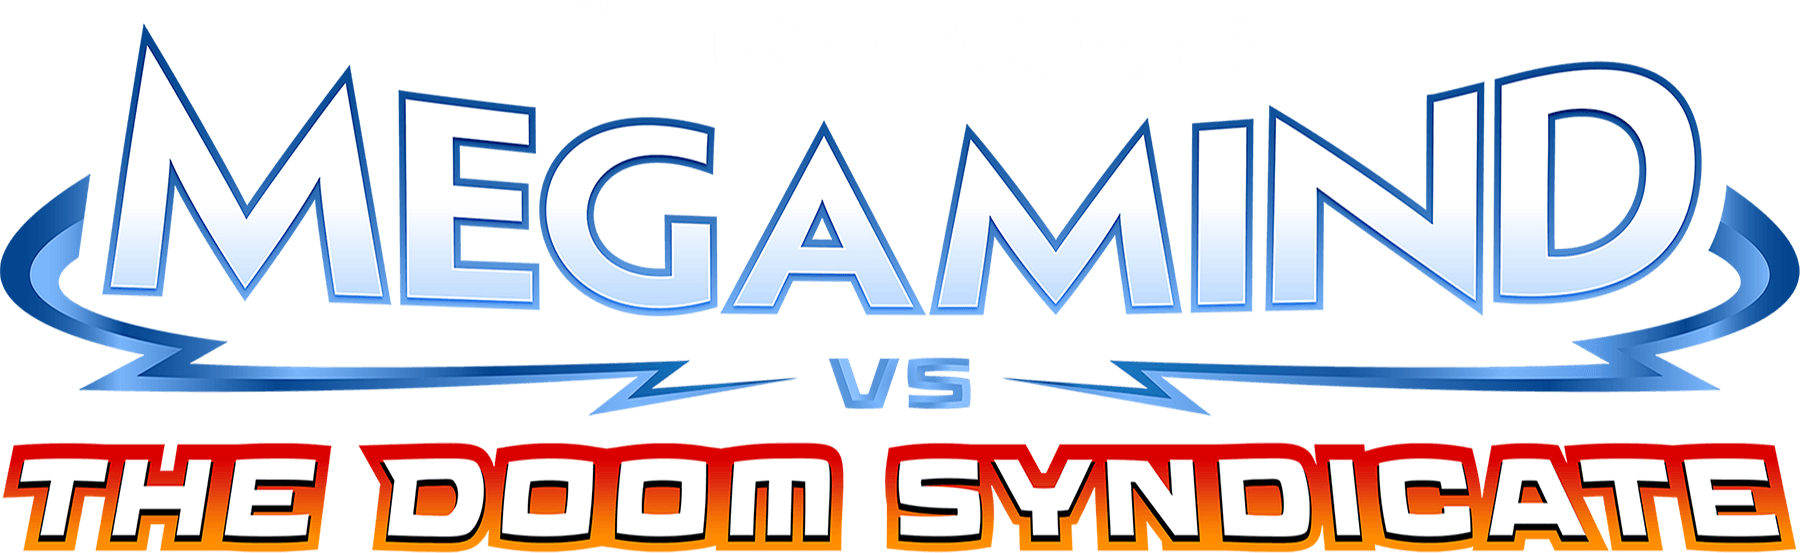 Megamind vs. the Doom Syndicate logo